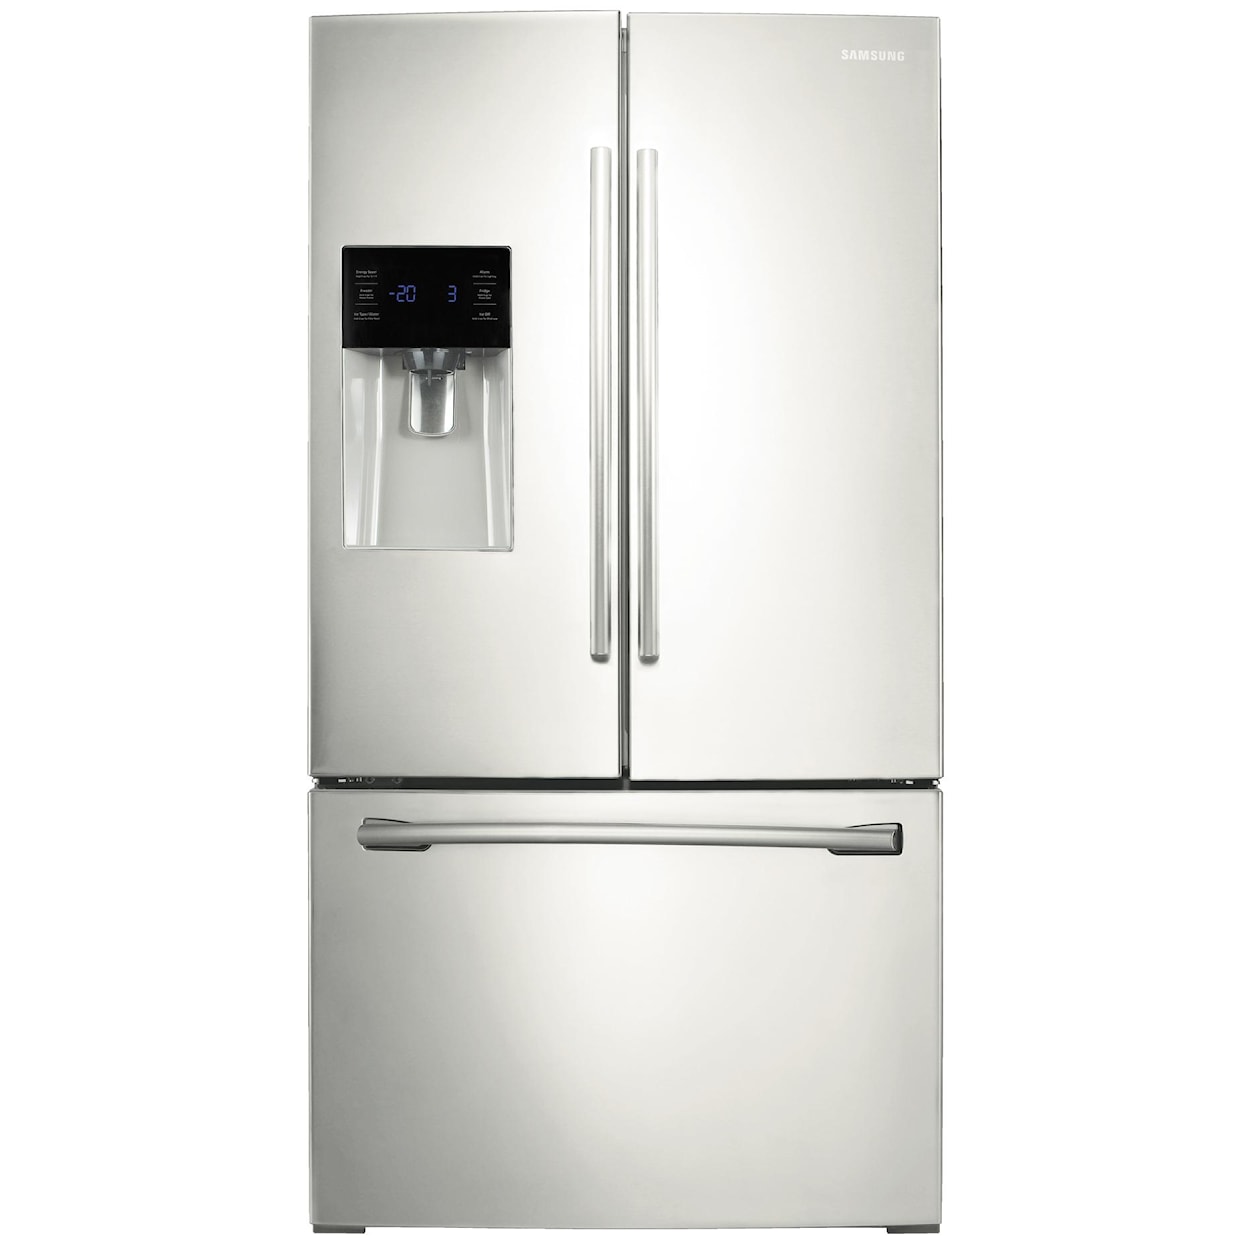 Samsung Appliances French Door Refrigerators 26 Cu. Ft. French Door Refrigerator